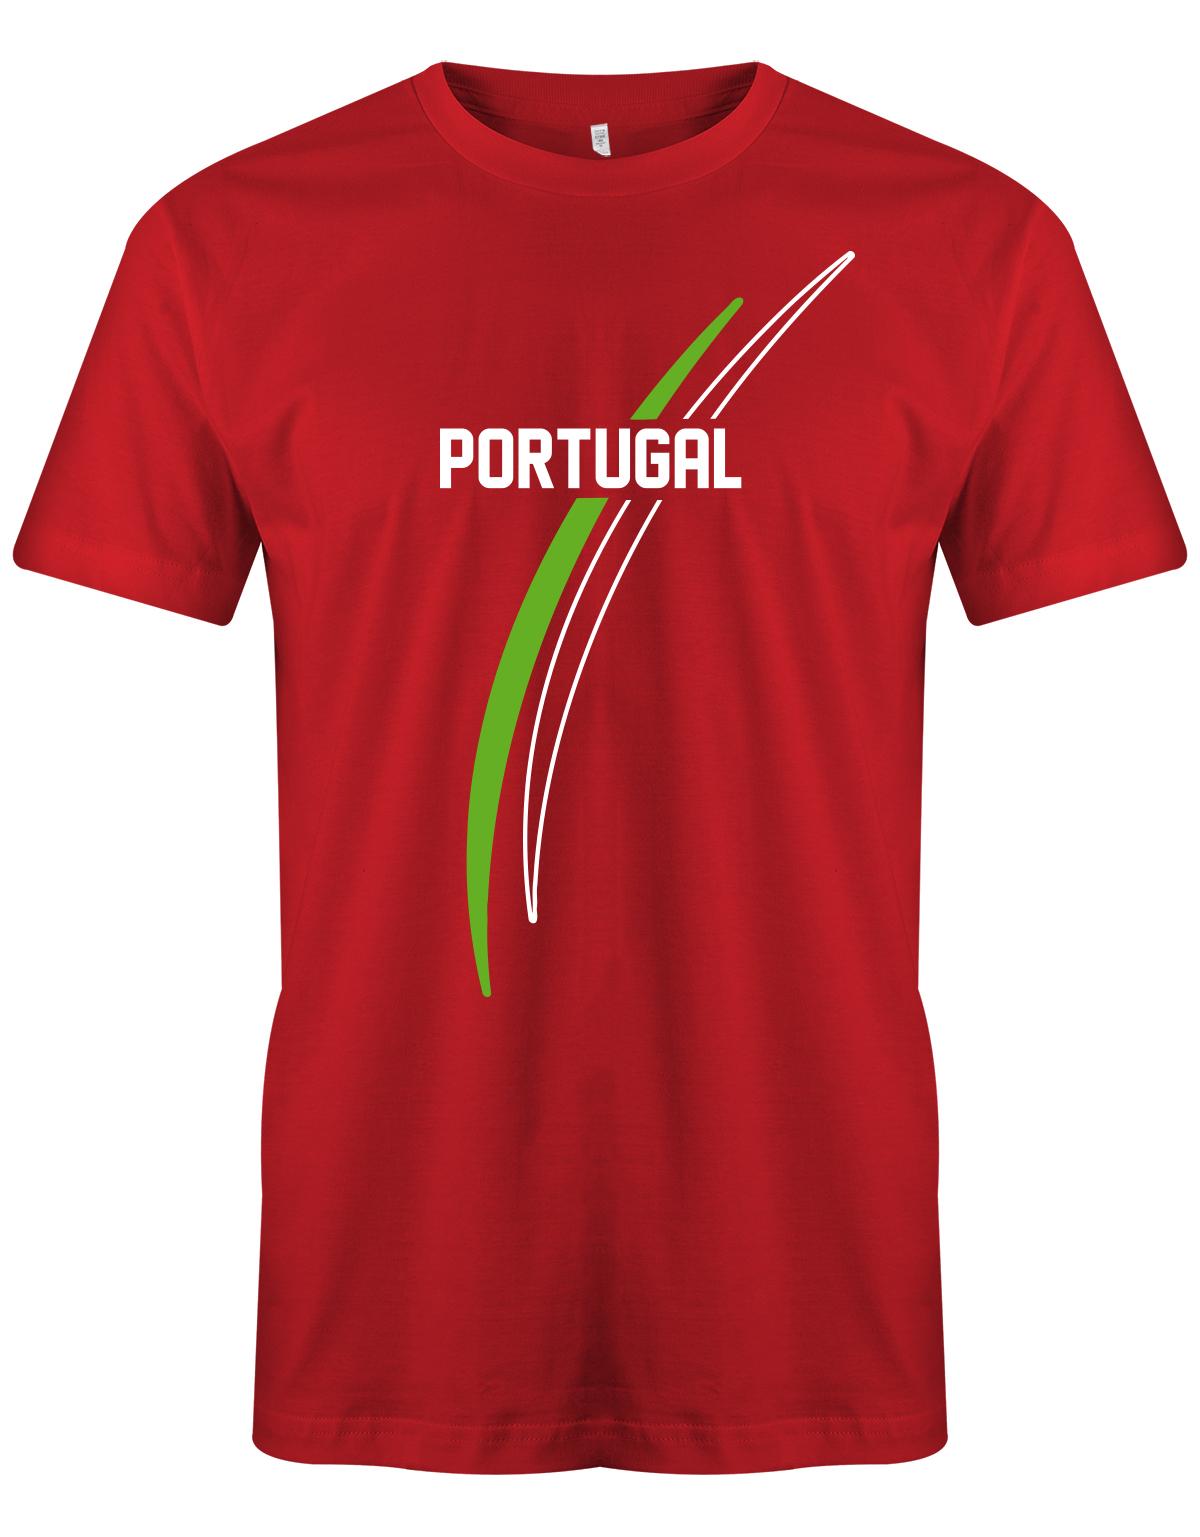 Portugal-Herren-Shirt-Rot